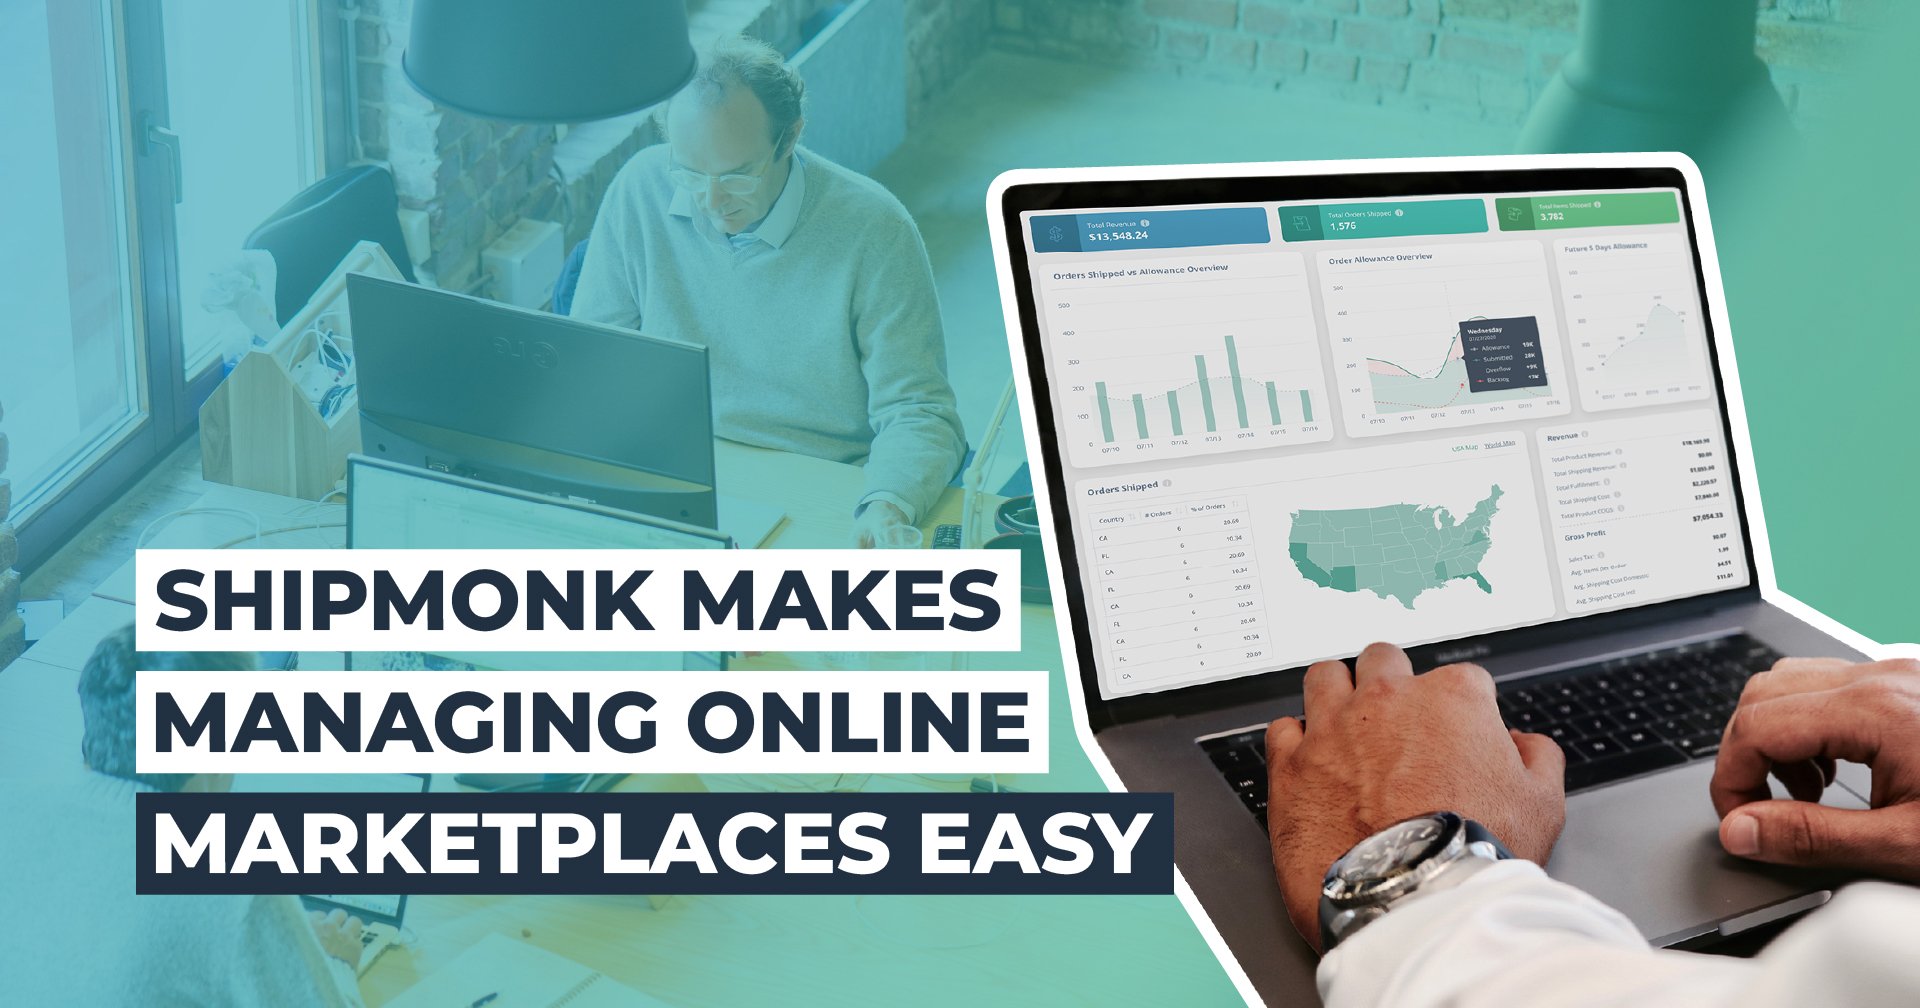 ShipMonk Makes Managing Online Marketplaces Easy